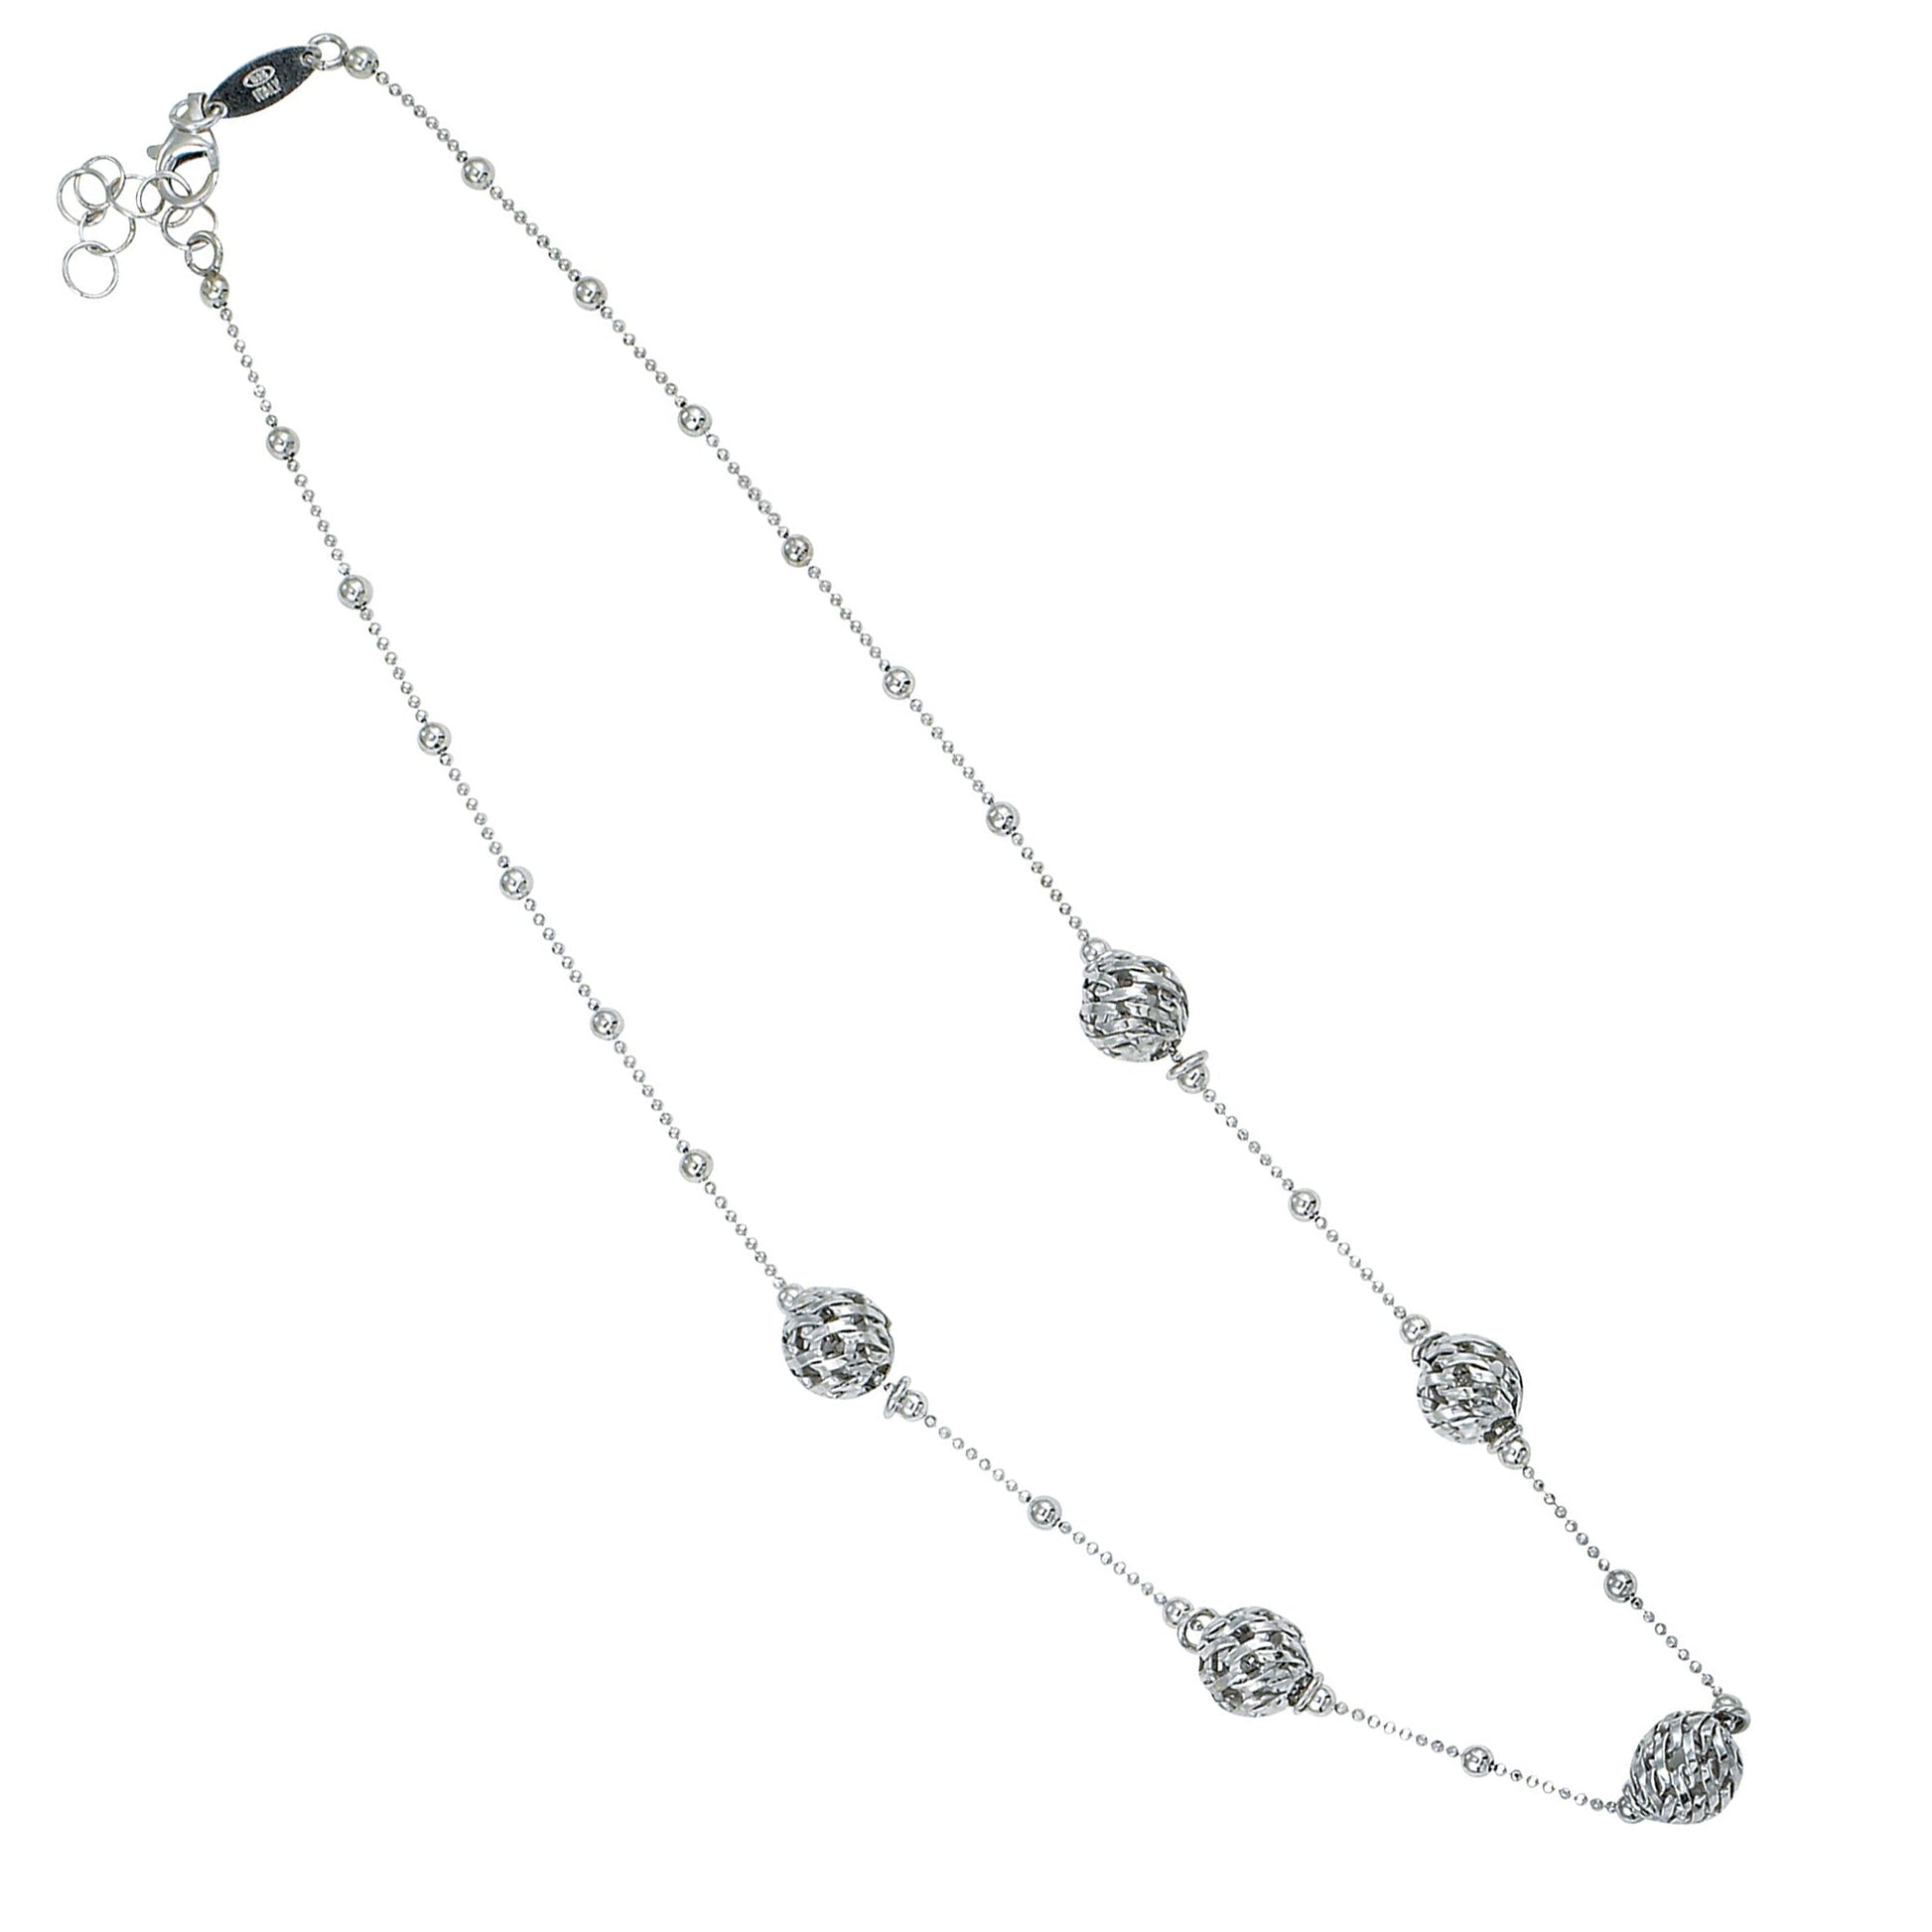 Franco Stellari Italian Sterling Silver Bead Stations Necklace